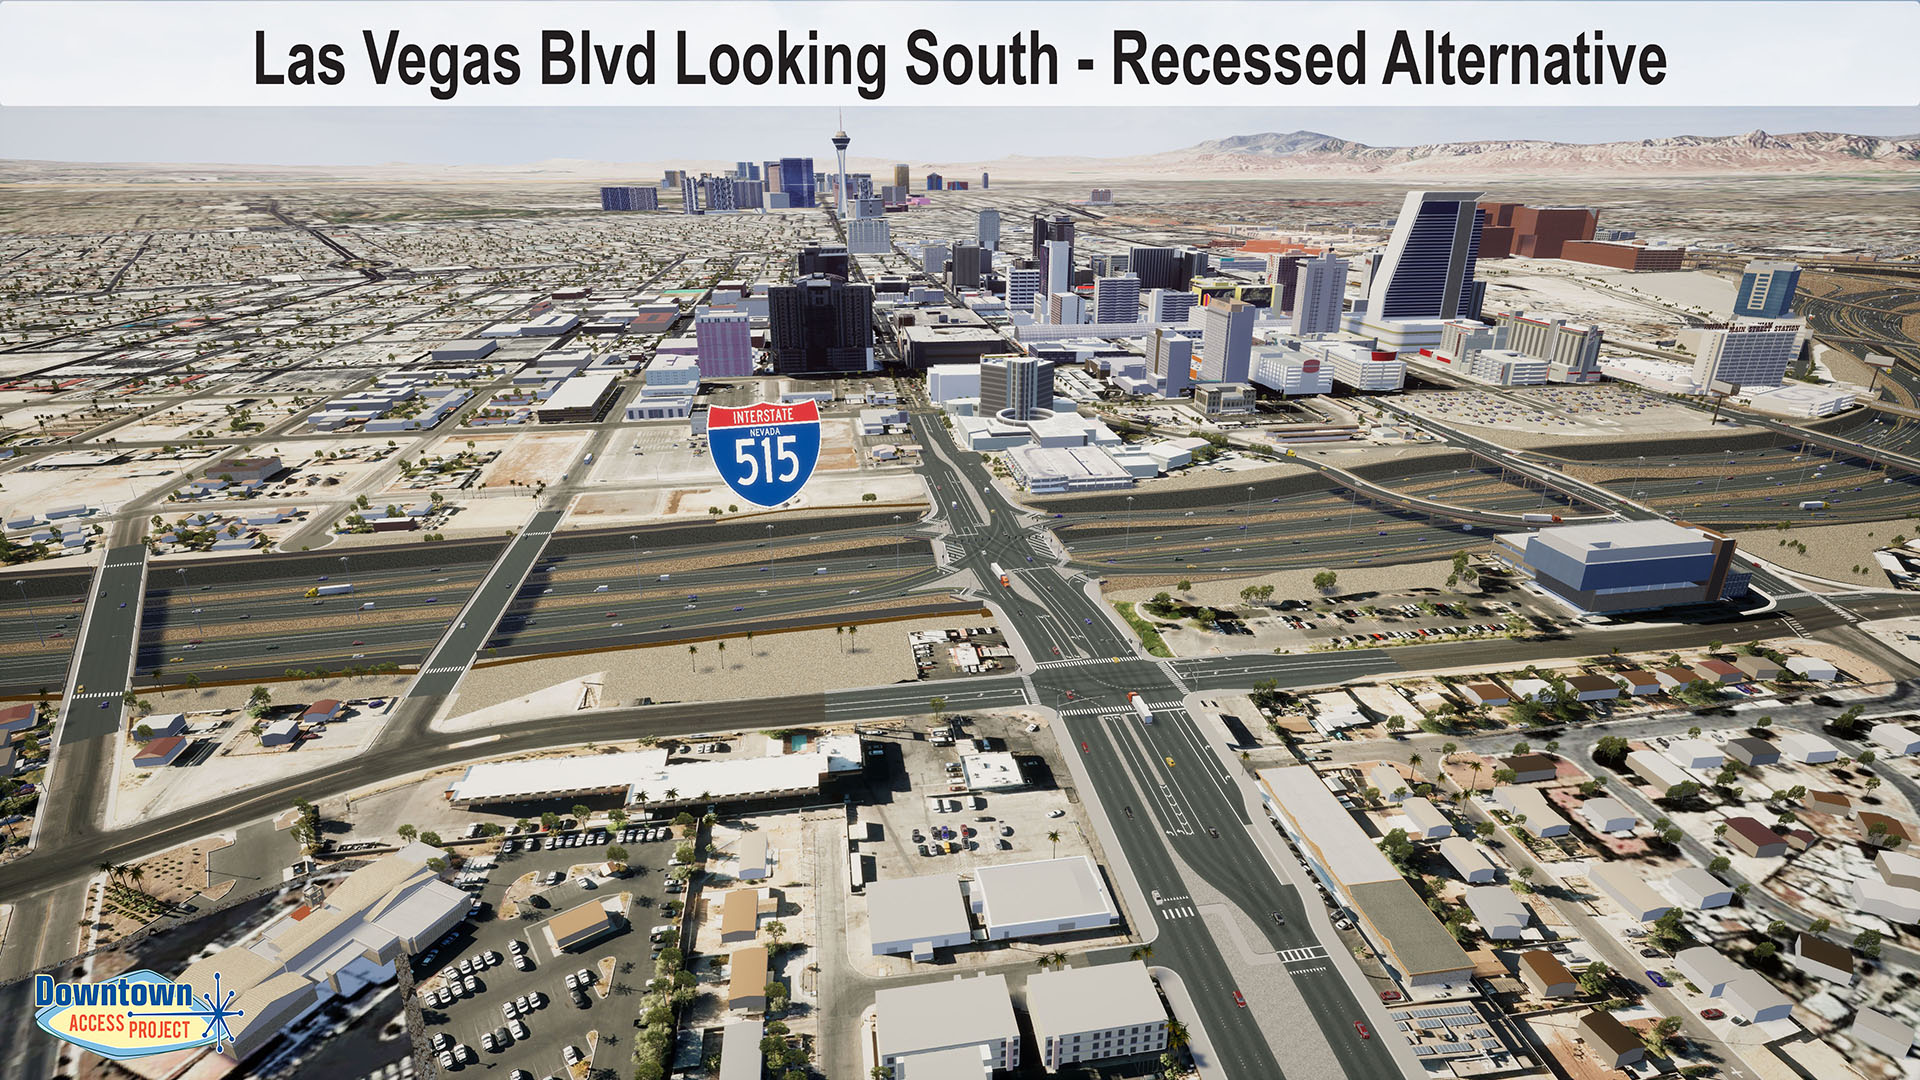 Las Vegas Blvd Looking South - Recessed Alternative